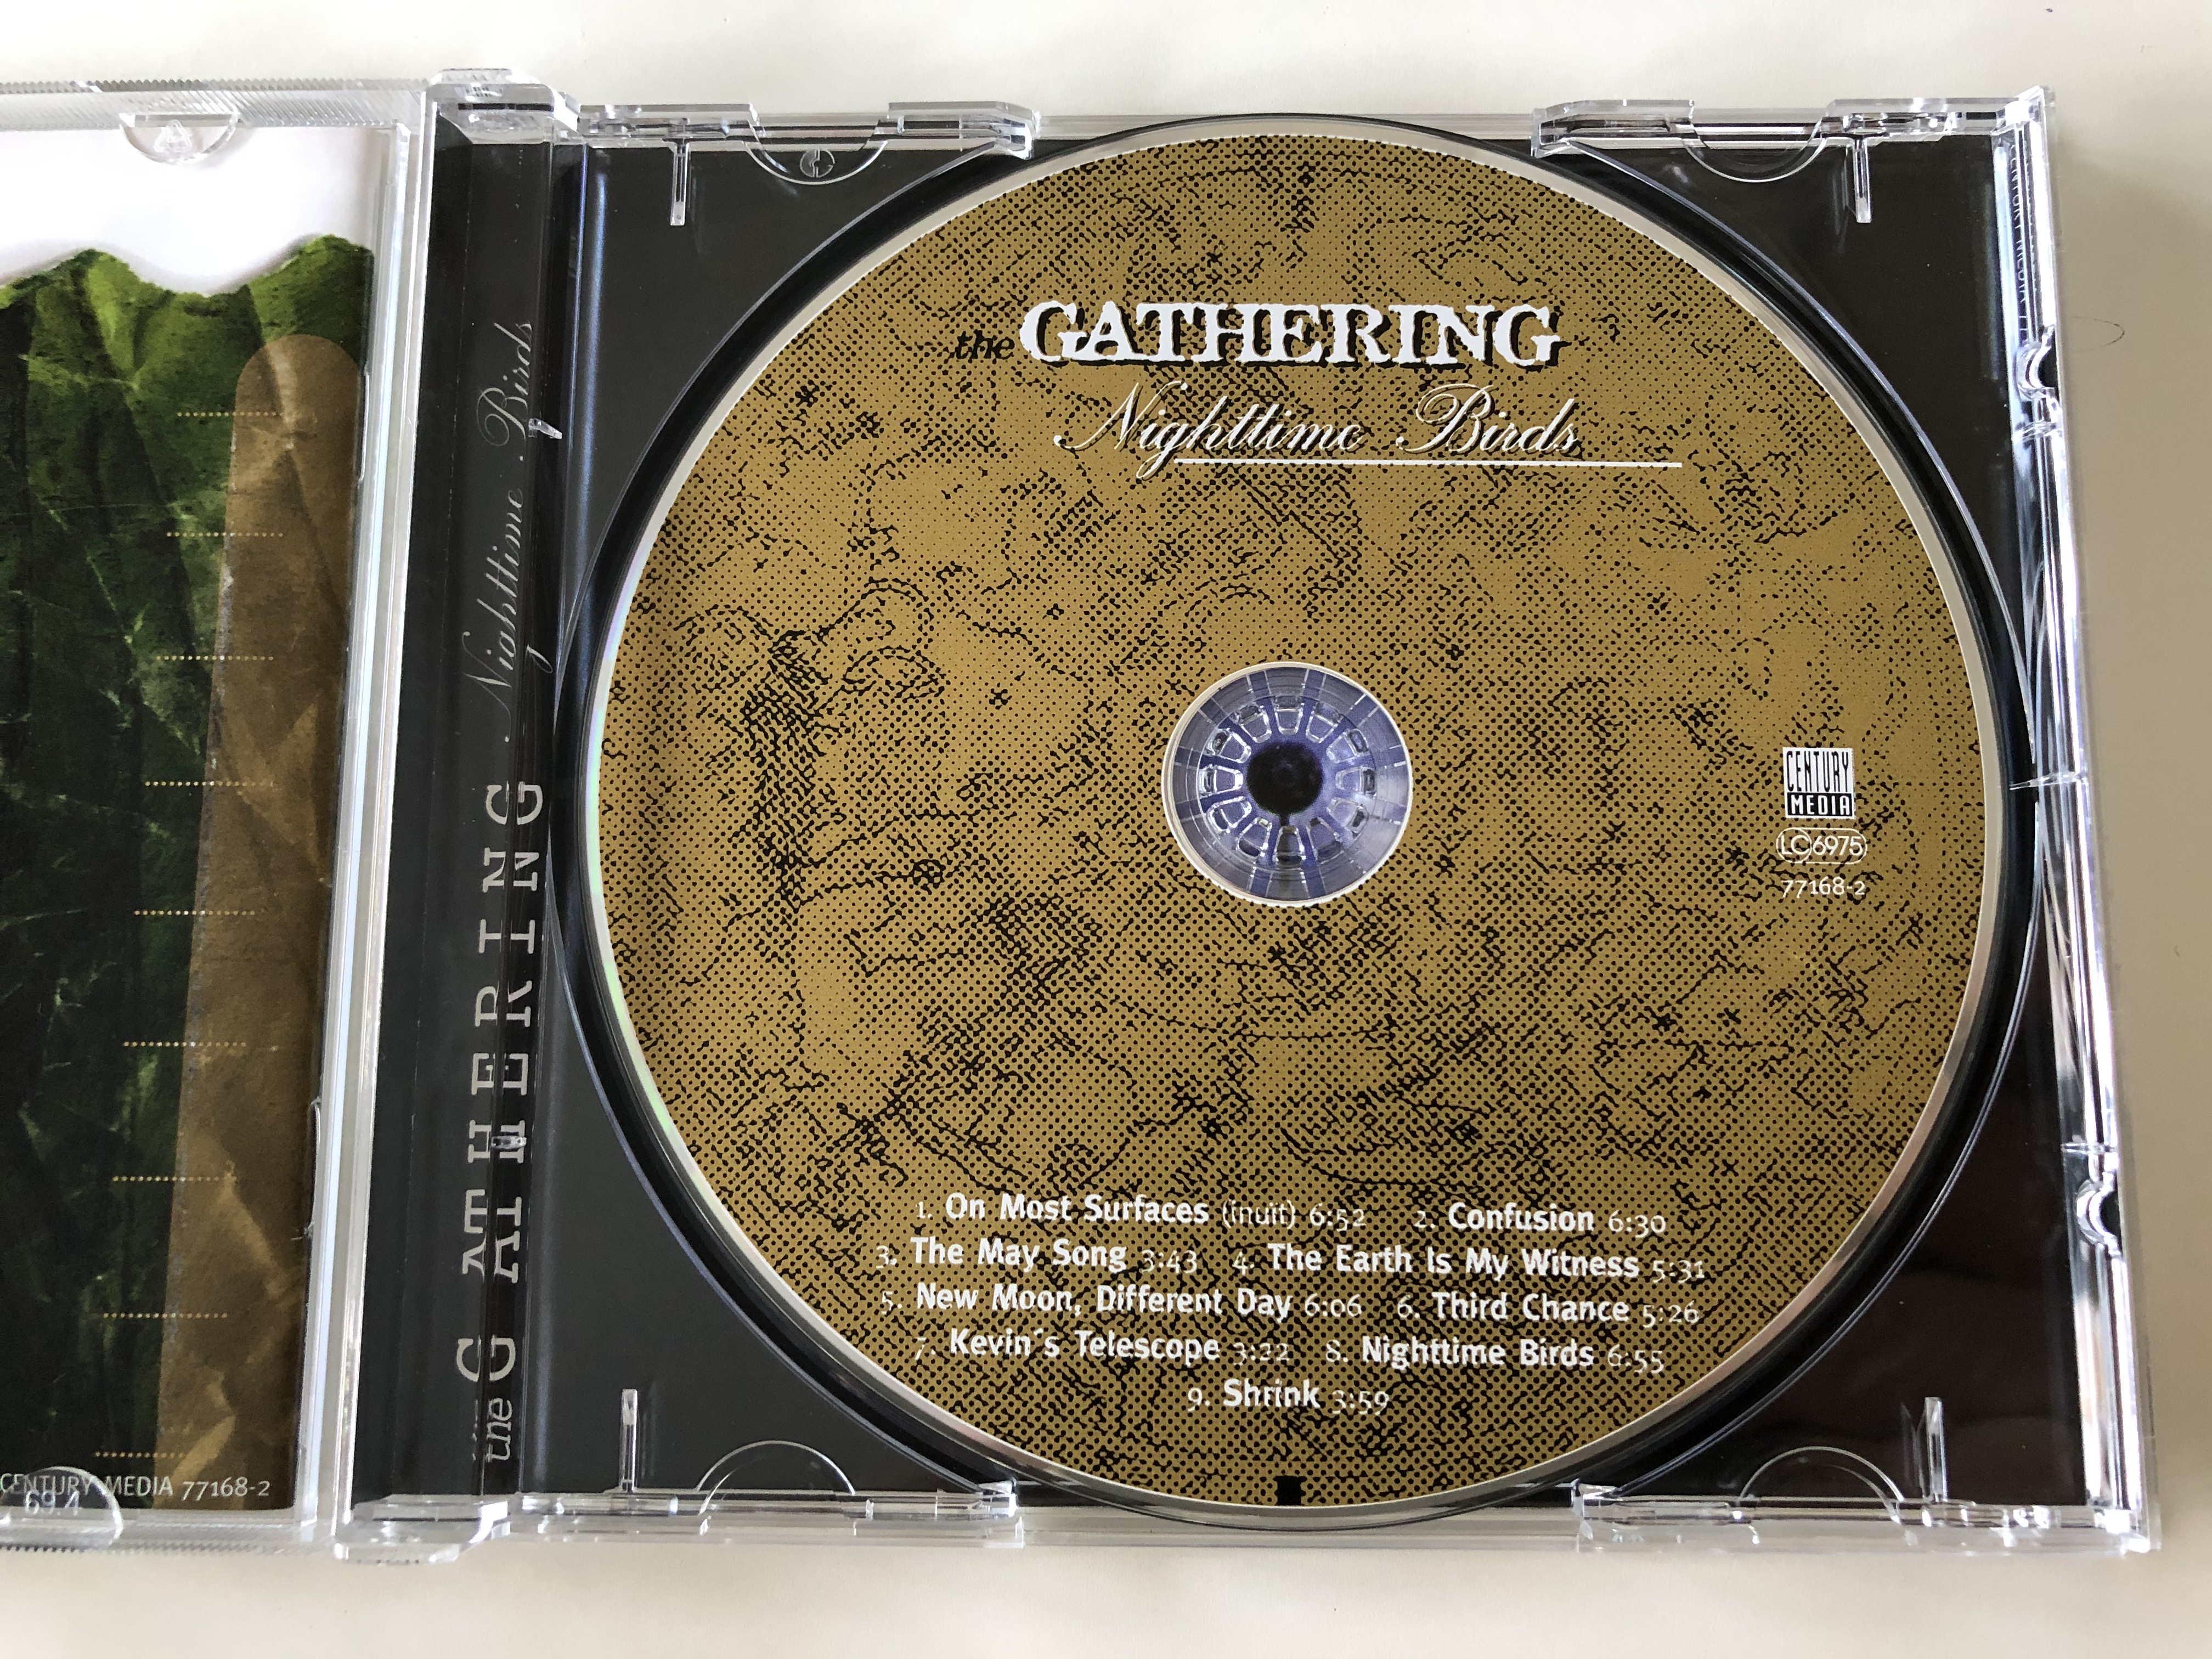 the-gathering-nighttime-birds-century-media-audio-cd-1997-77168-2-8-.jpg